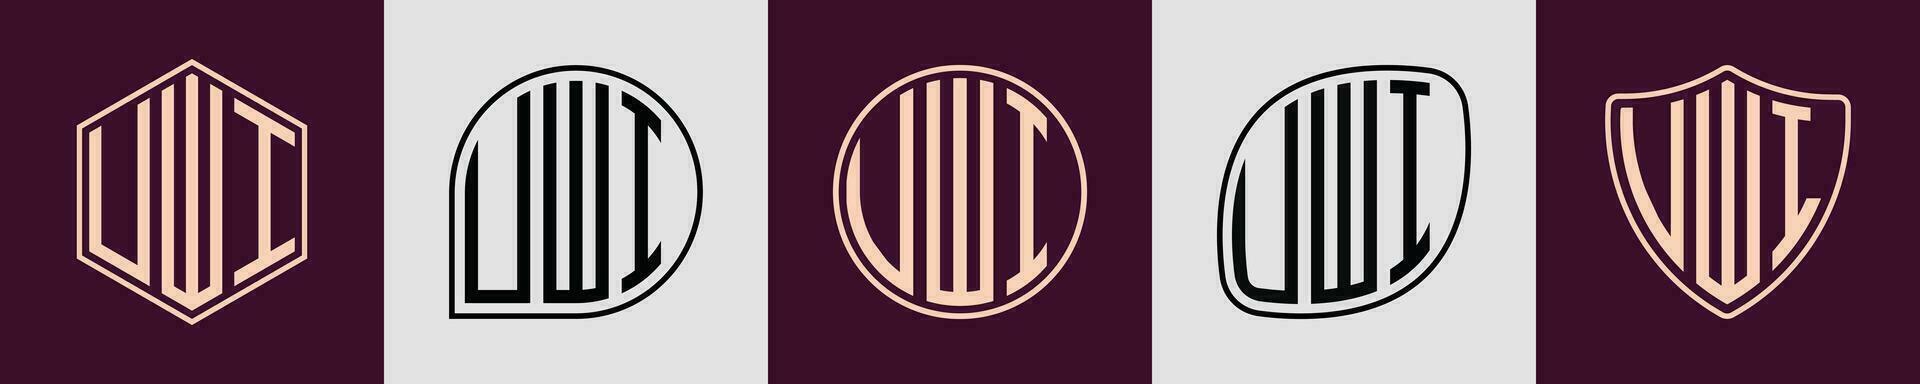 criativo simples inicial monograma uwi logotipo projetos. vetor